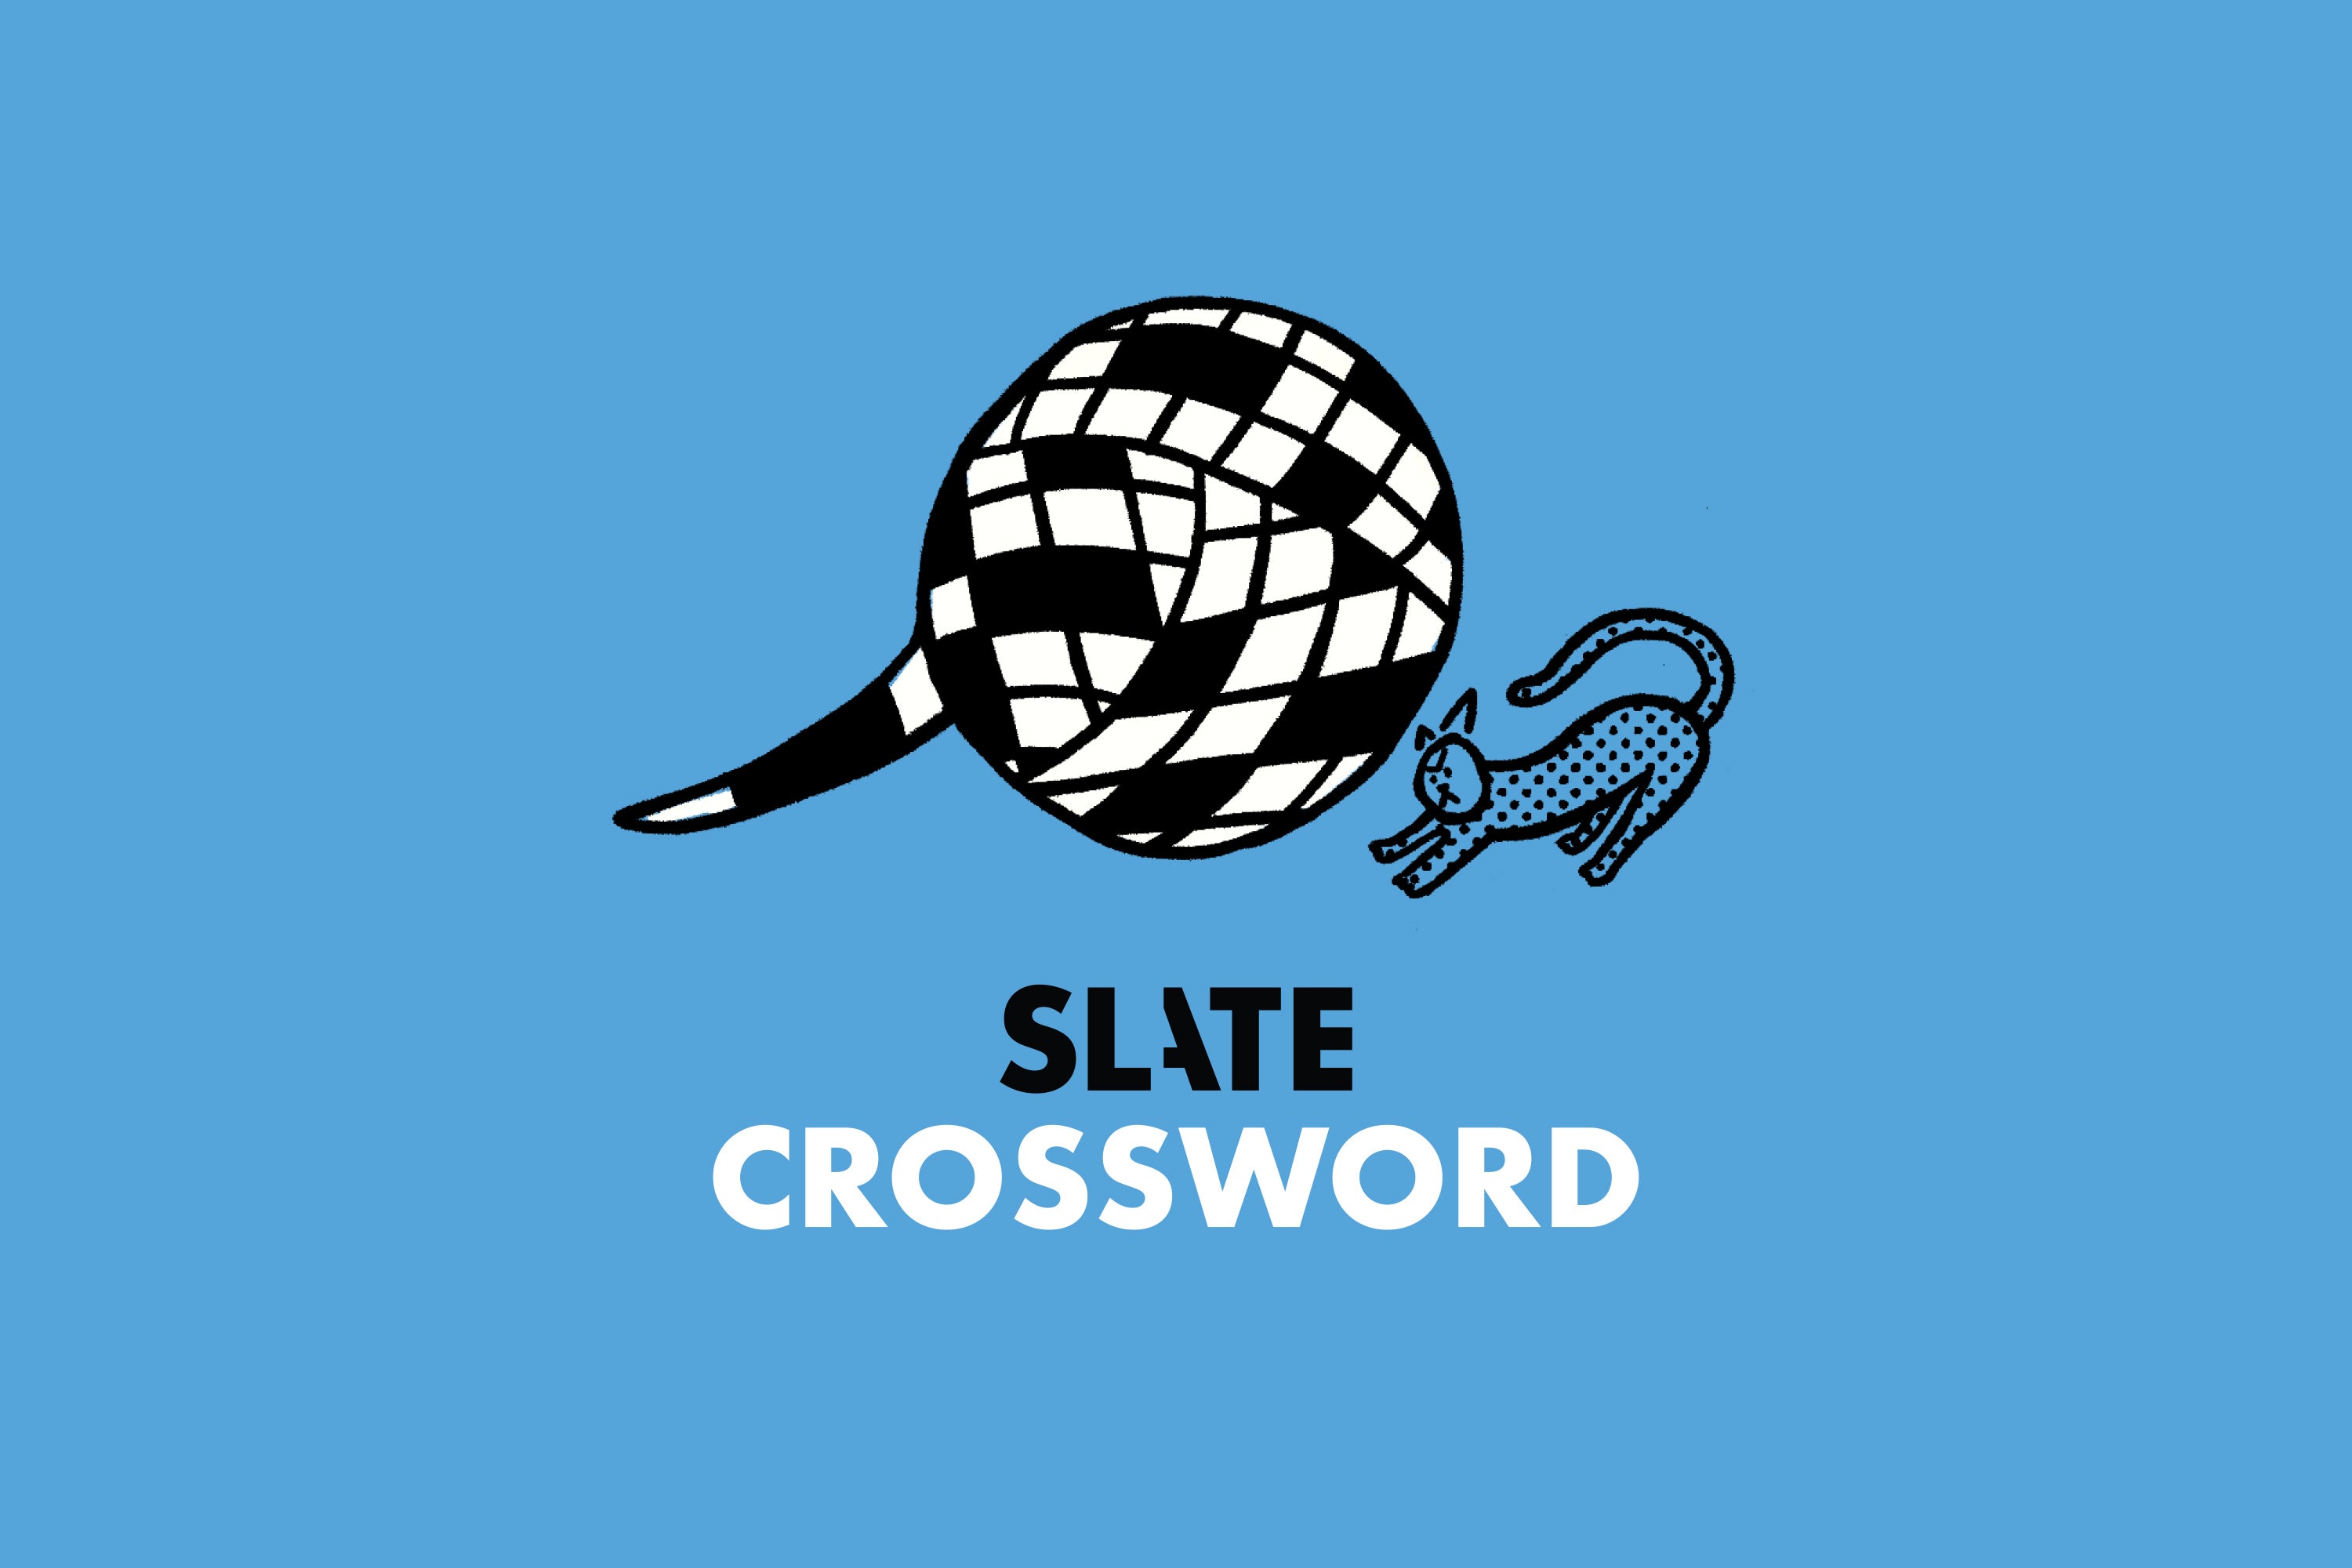 Slate Crossword: Big Buttes (Five Letters)